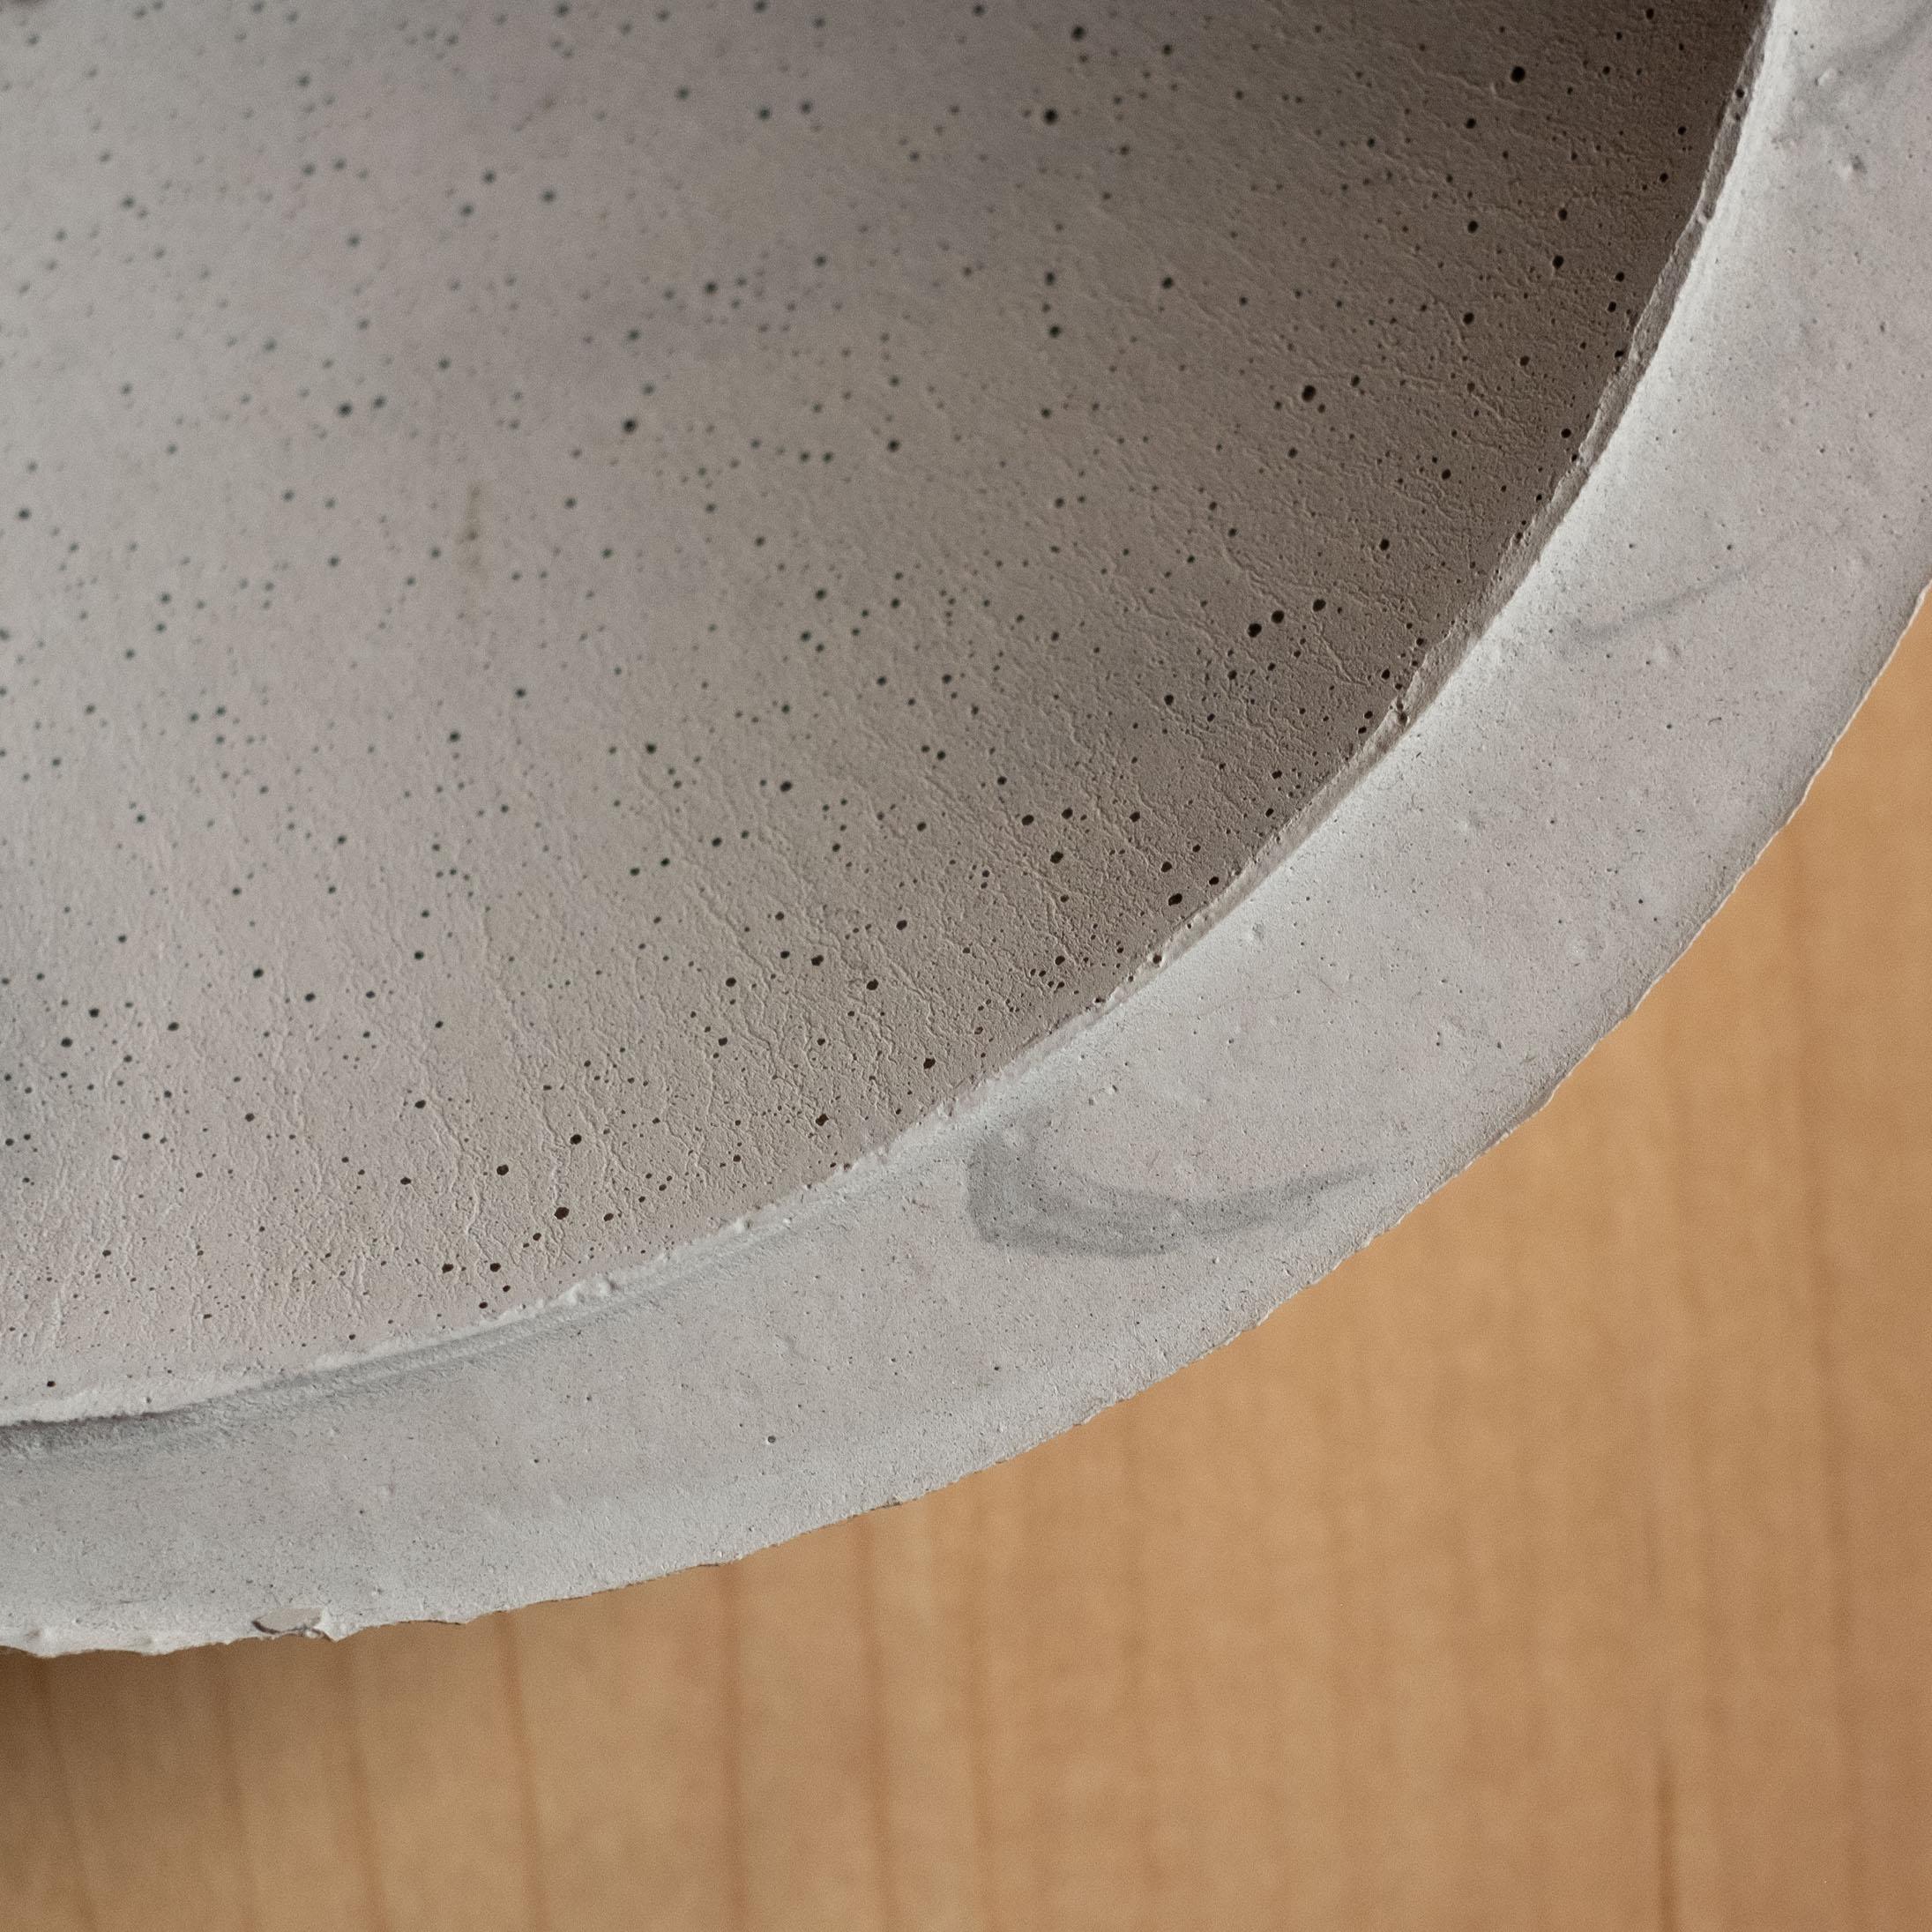 Handmade Cast Concrete Bowl in Grey by Umé Studio For Sale 1